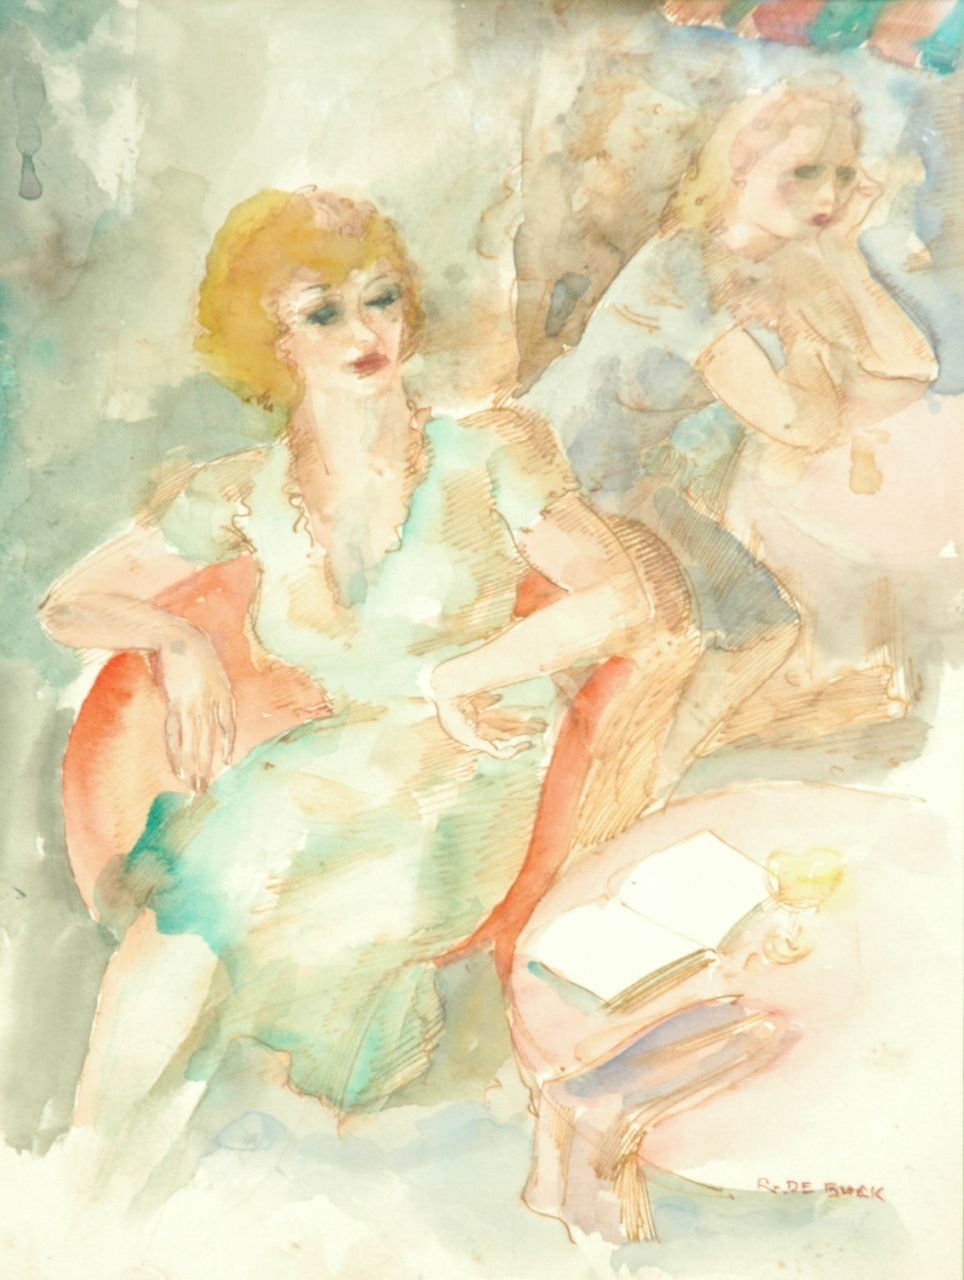 Buck R. de | Raphaël de Buck, Caféterras, aquarel op papier 31,5 x 24,0 cm, gesigneerd rechtsonder